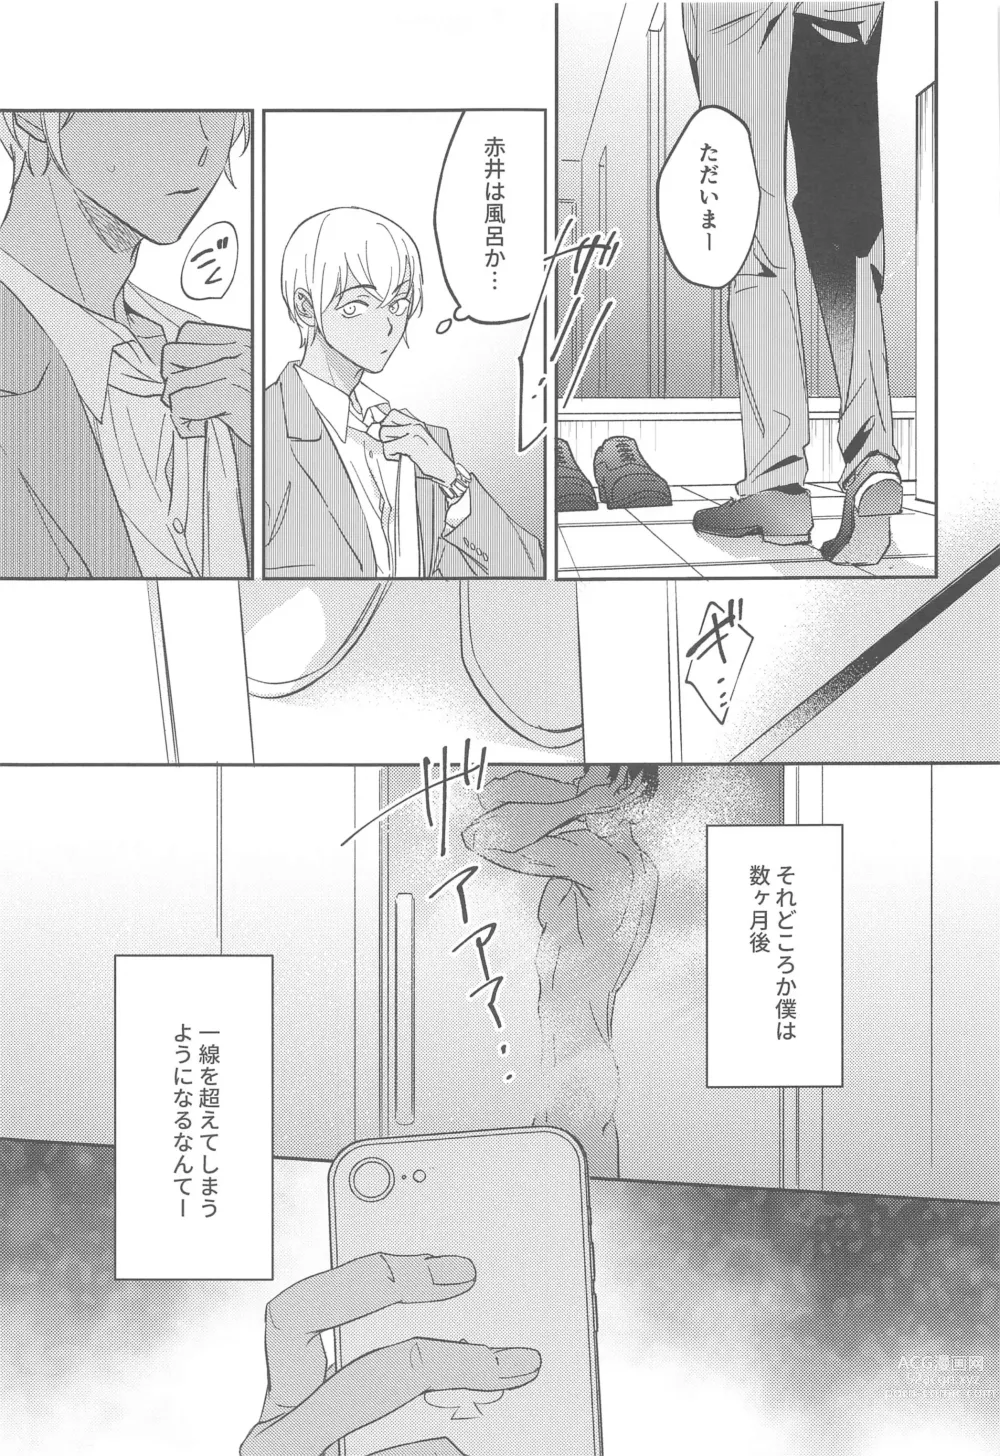 Page 6 of doujinshi REC